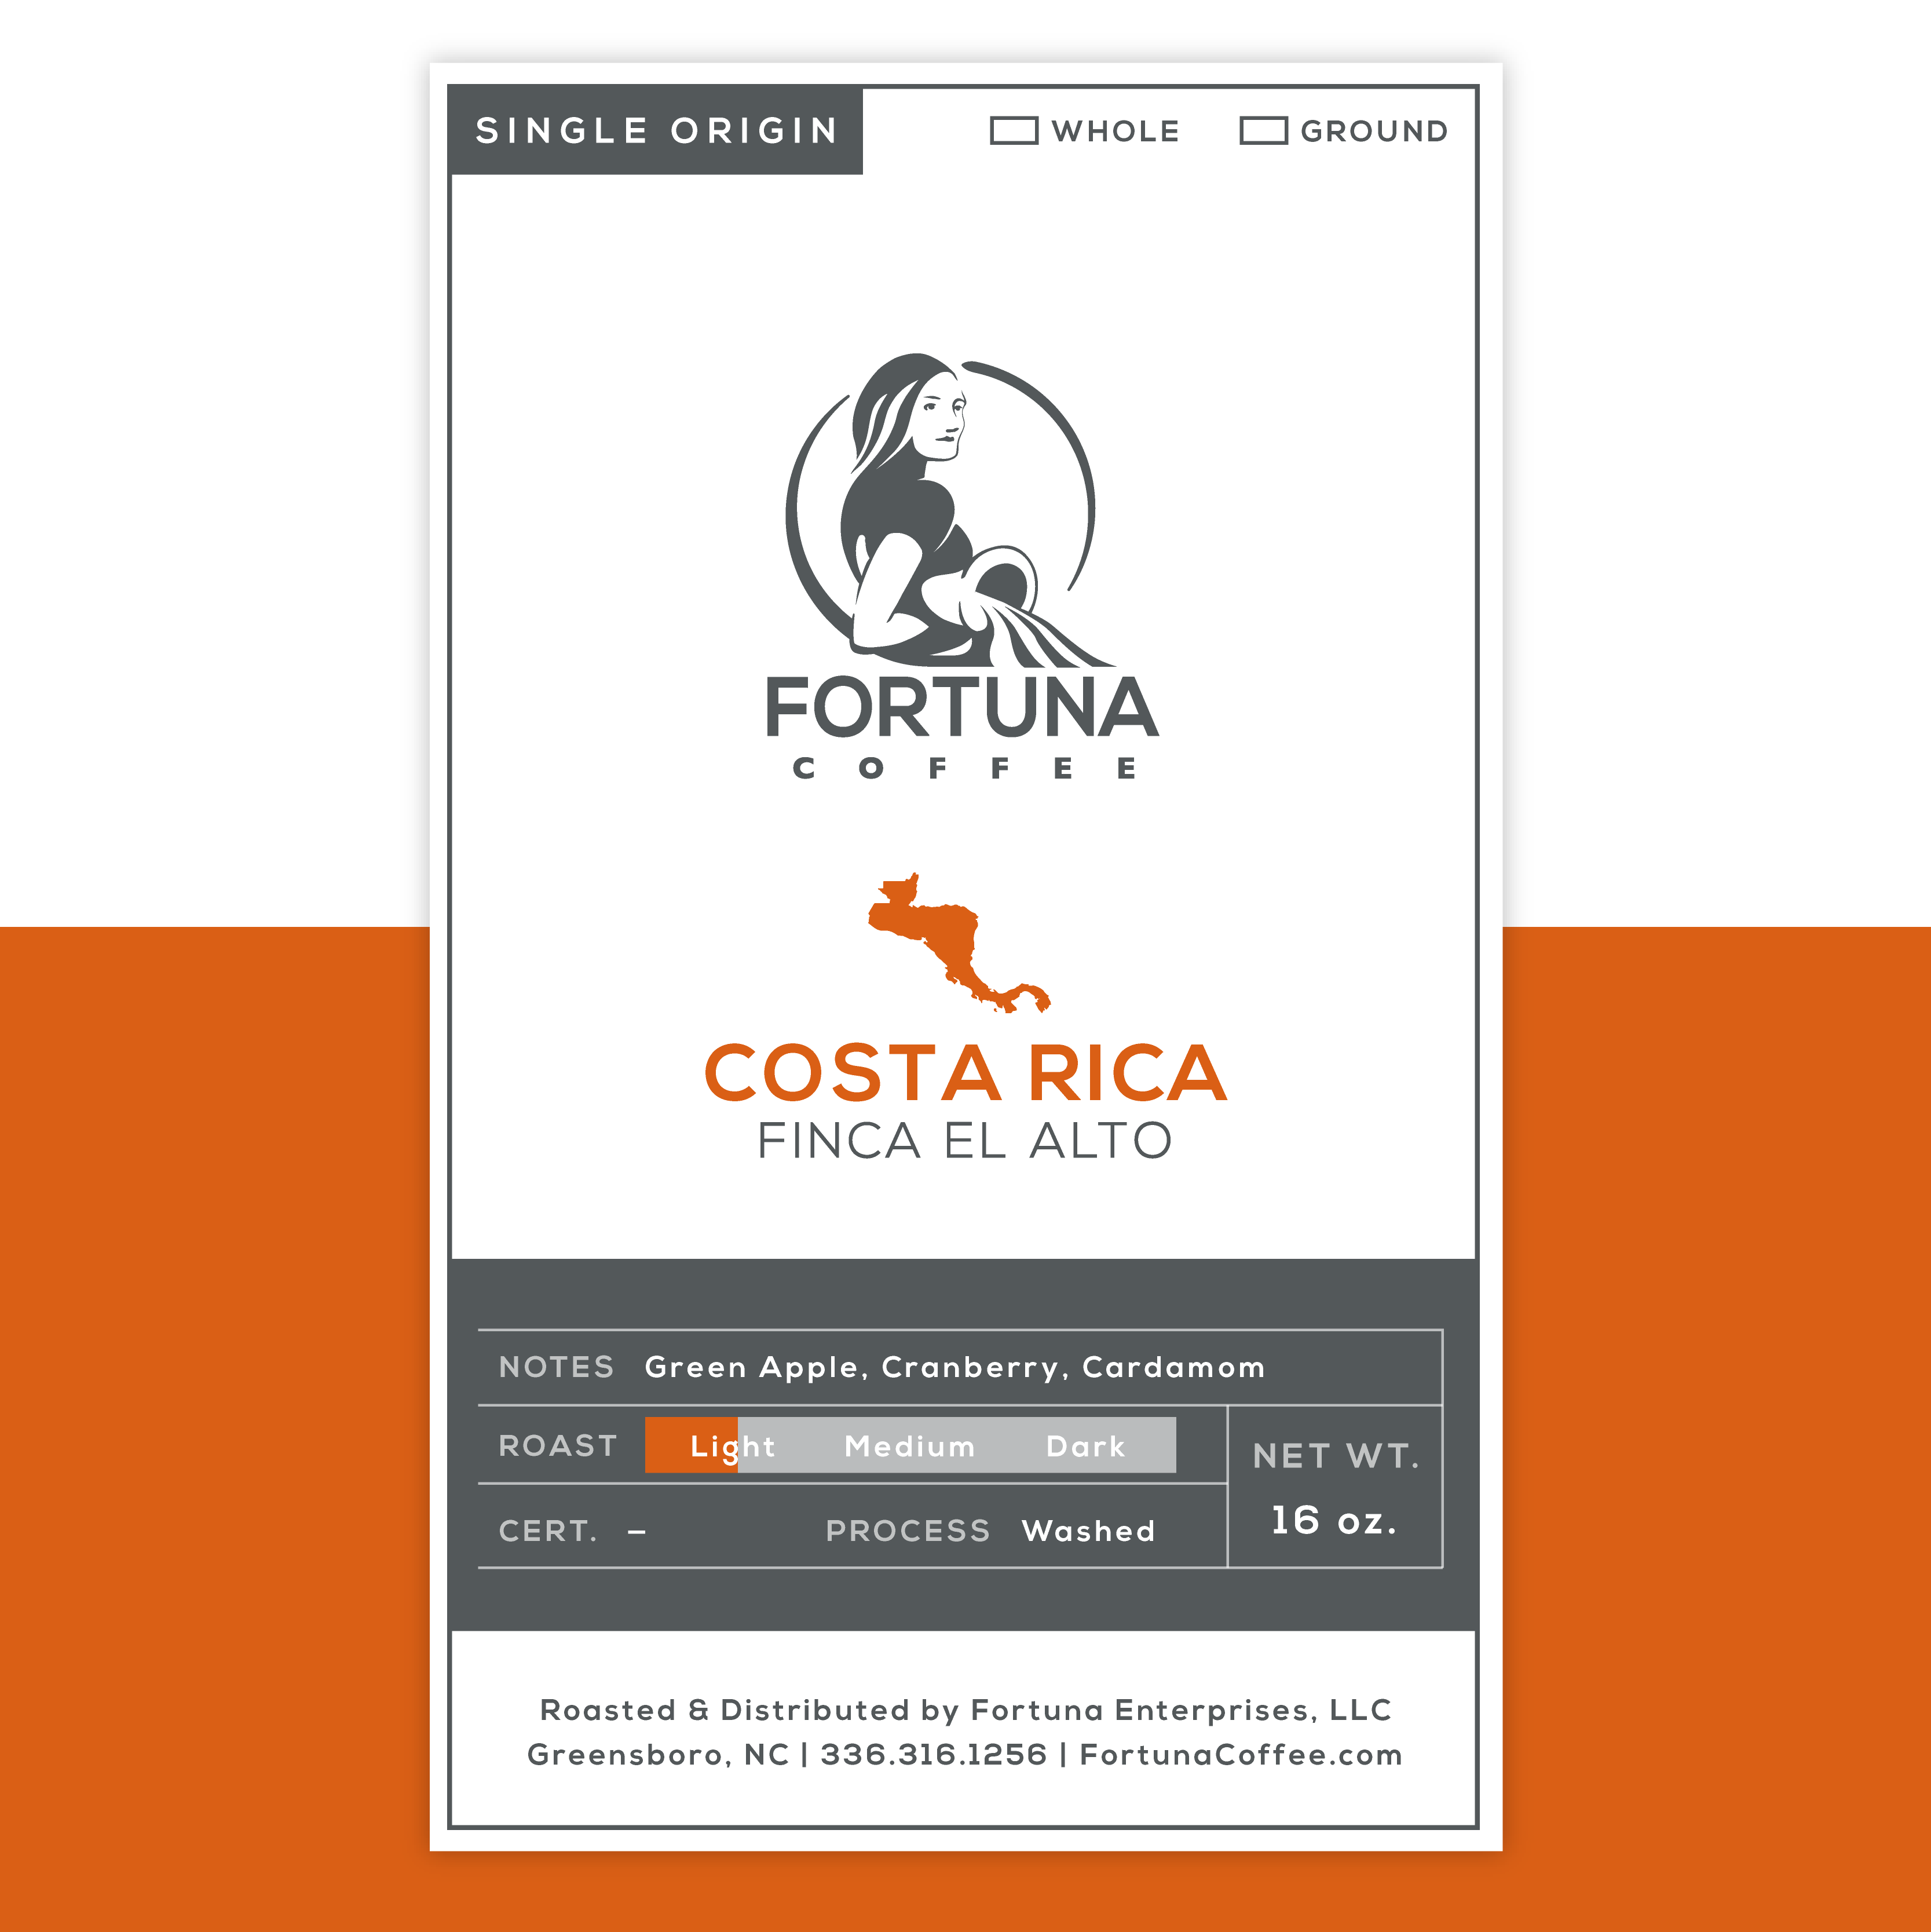 Costa Rica Finca El Alto - Fortuna Coffee